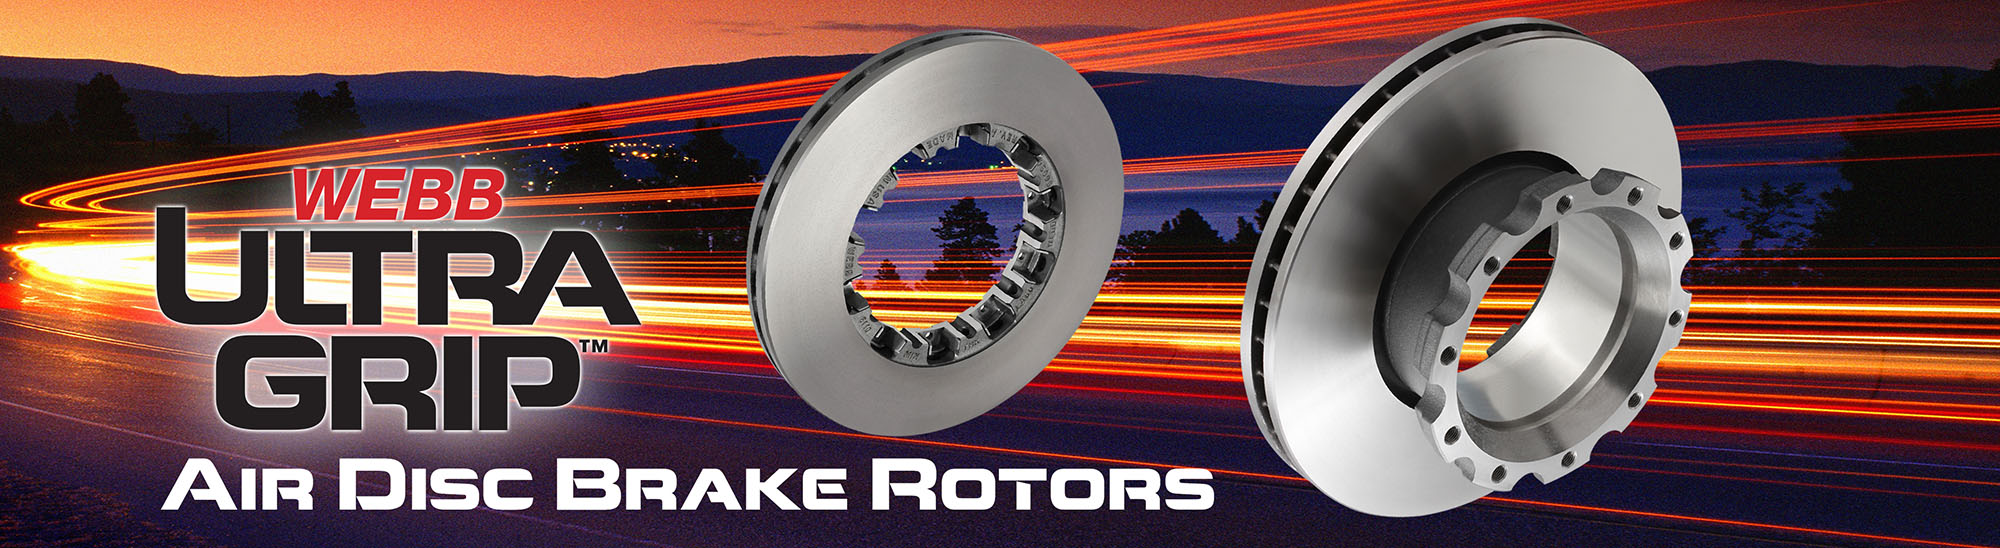 adb rotors fight corrosion and rust